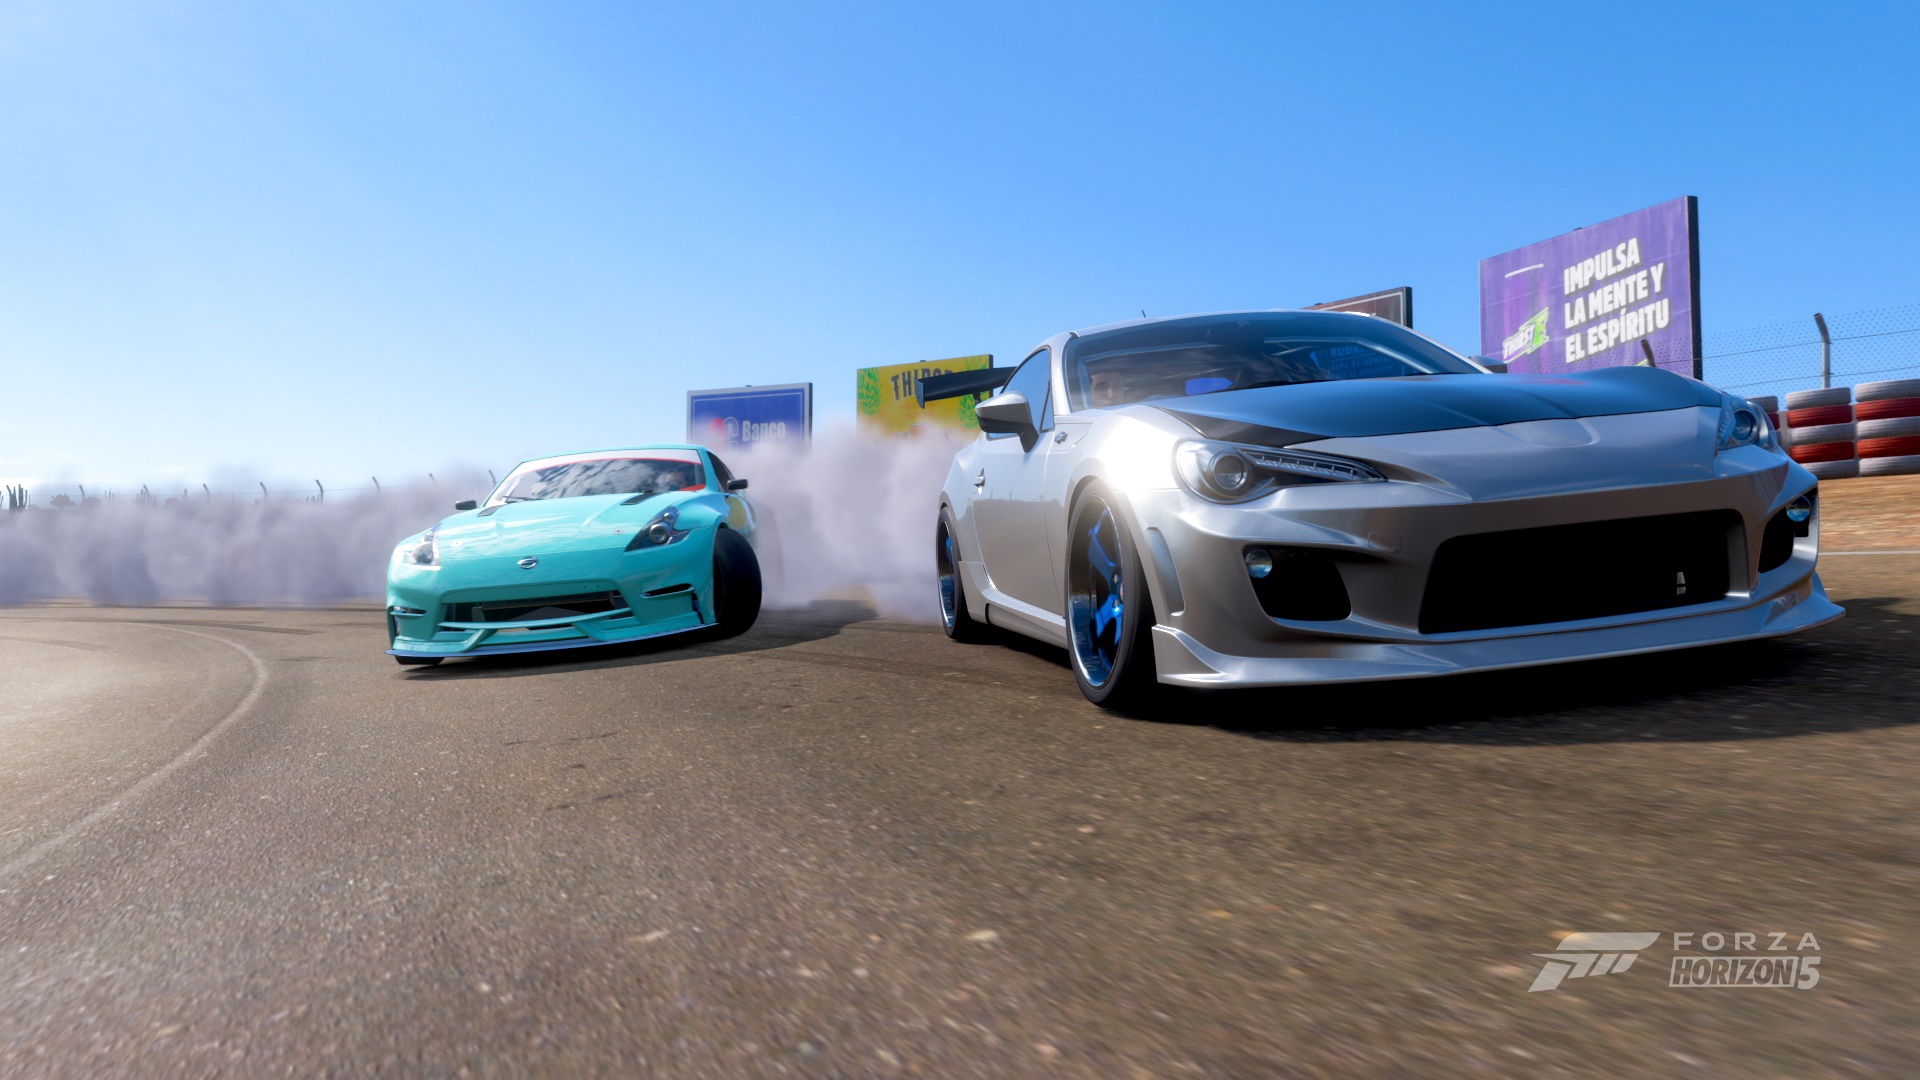 General 1920x1080 Forza Forza Horizon 5 racing car drift drift cars smoke motion blur depth of field tuning custom-made video games